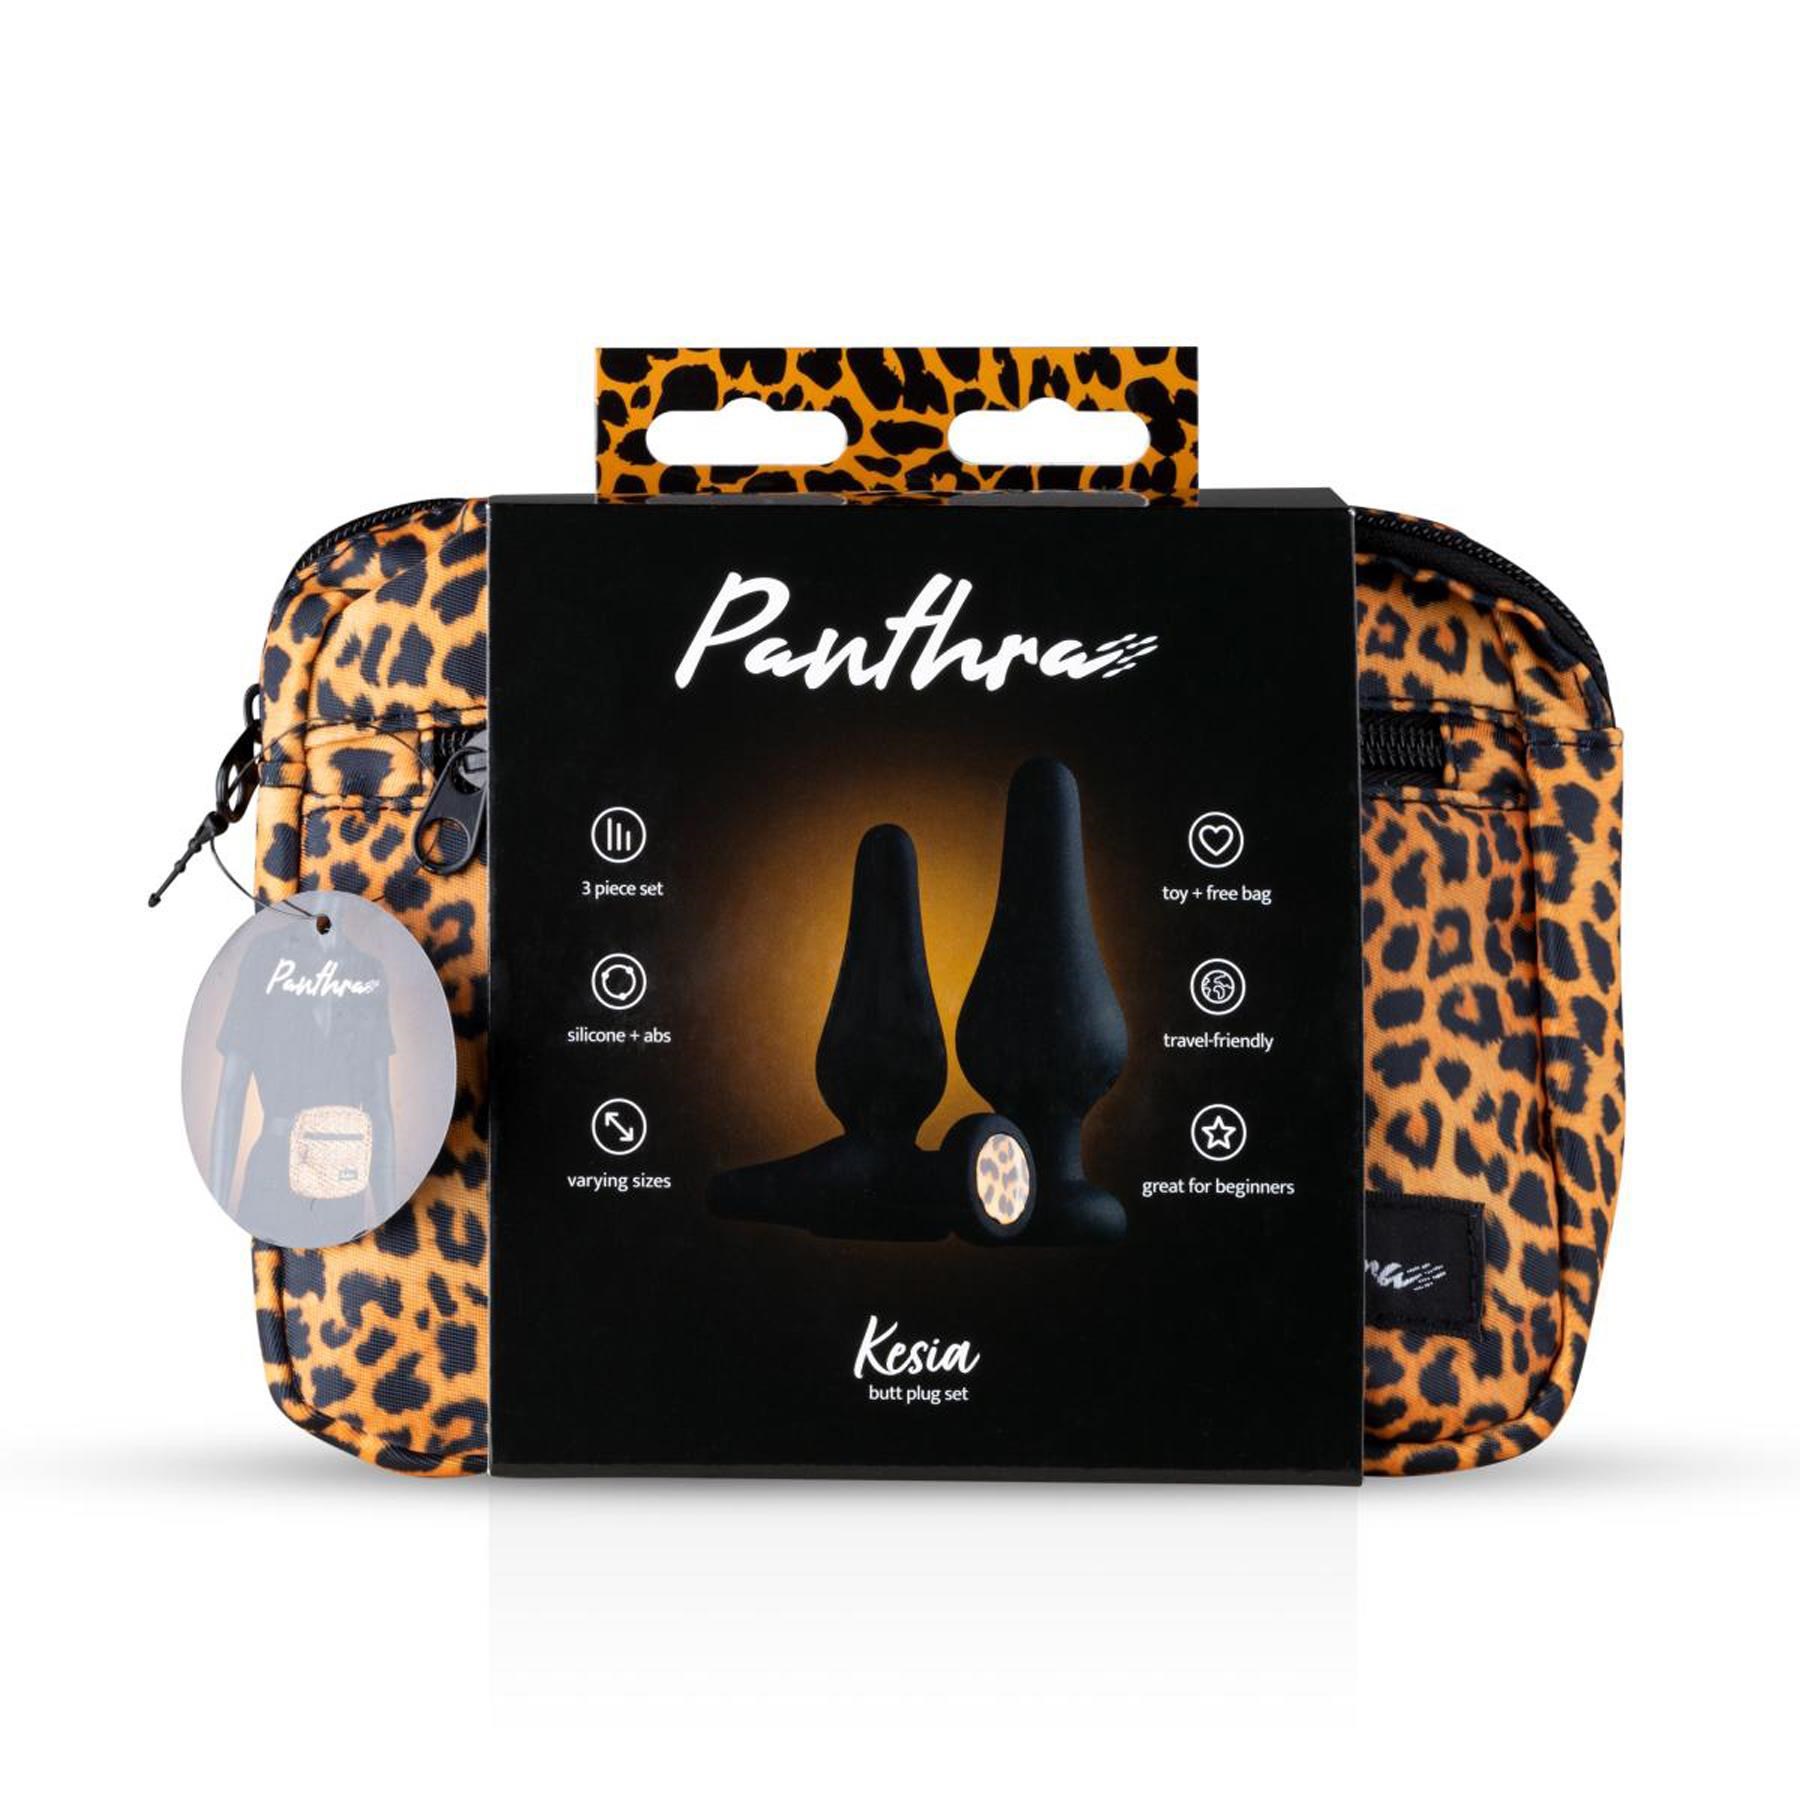 Panthra Kesia Butt Plug Set - Packaging Shot